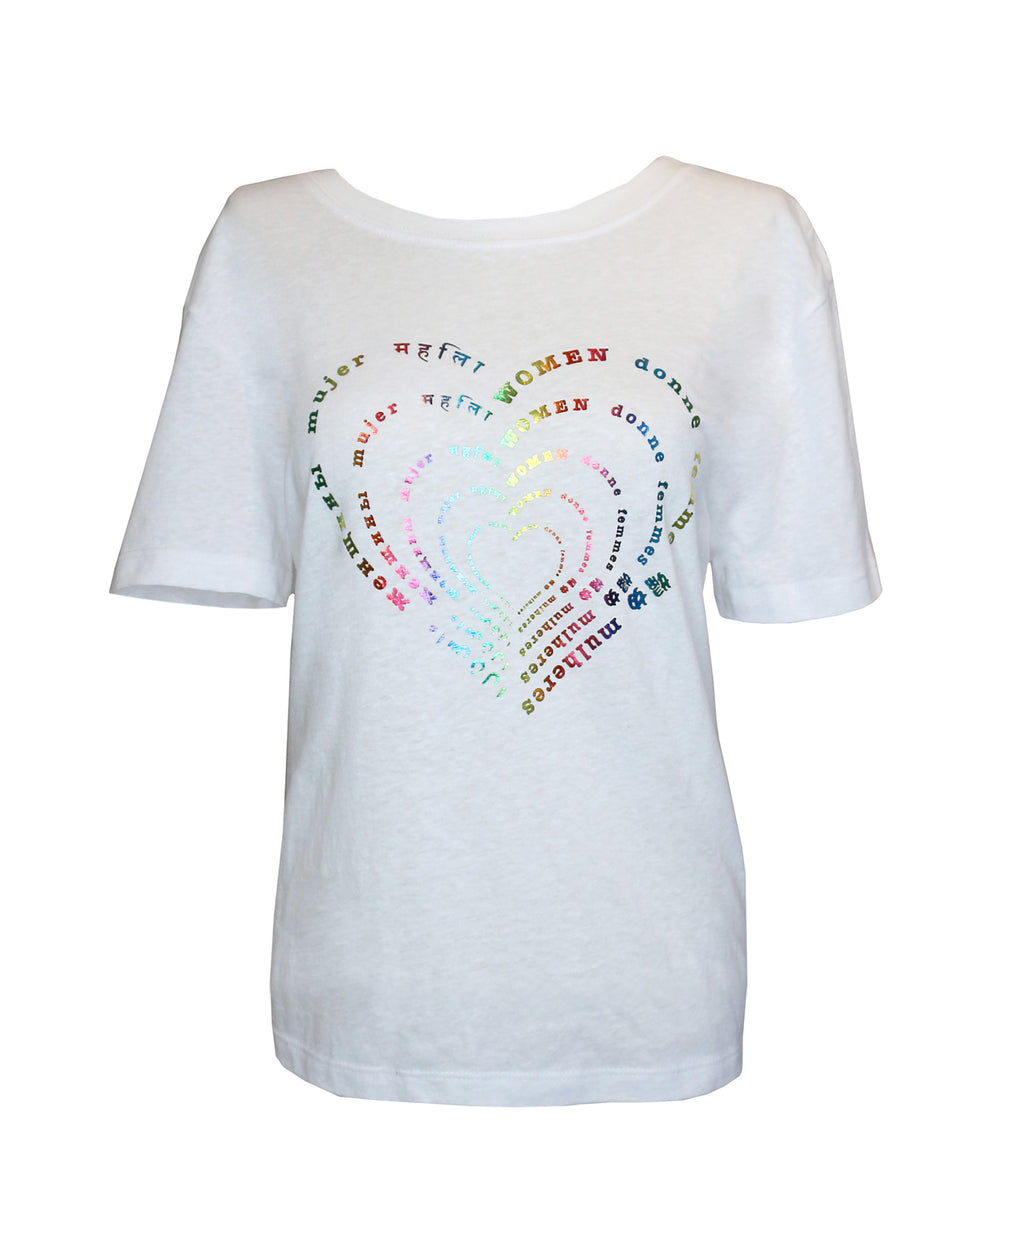 Rainbow Women T-Shirt - Supports World Of Children | Rainbow Women T-Shirt - Supports World Of Children